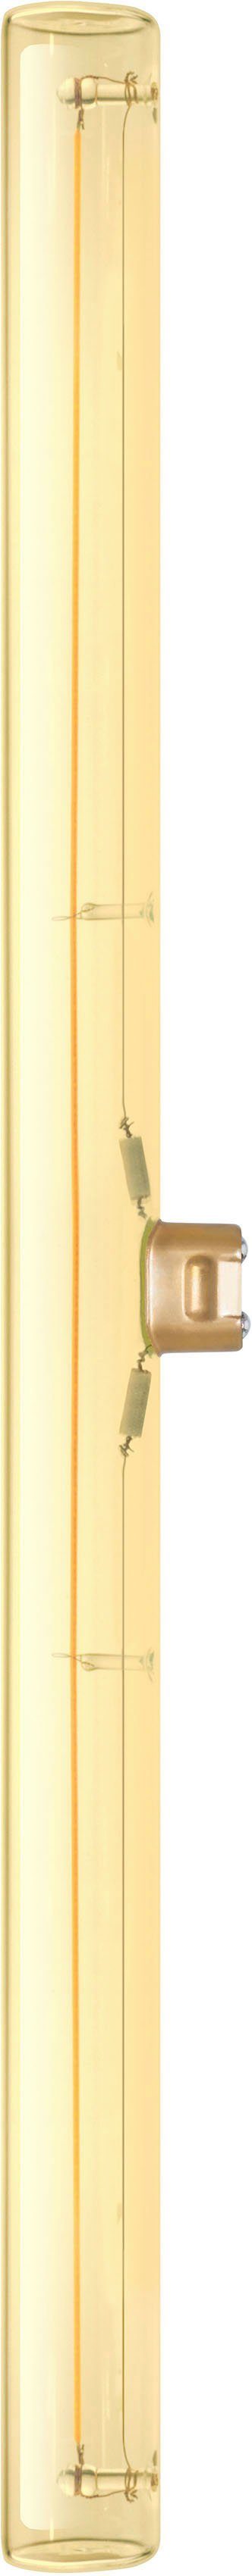 1 SEGULA gold, S14d S14d dimmbar 90, 500mm gold, S14d, St., 500mm LED CRI Linienlampe LED-Leuchtmittel 2200K, Linienlampe LED Extra-Warmweiß, 4,5W,